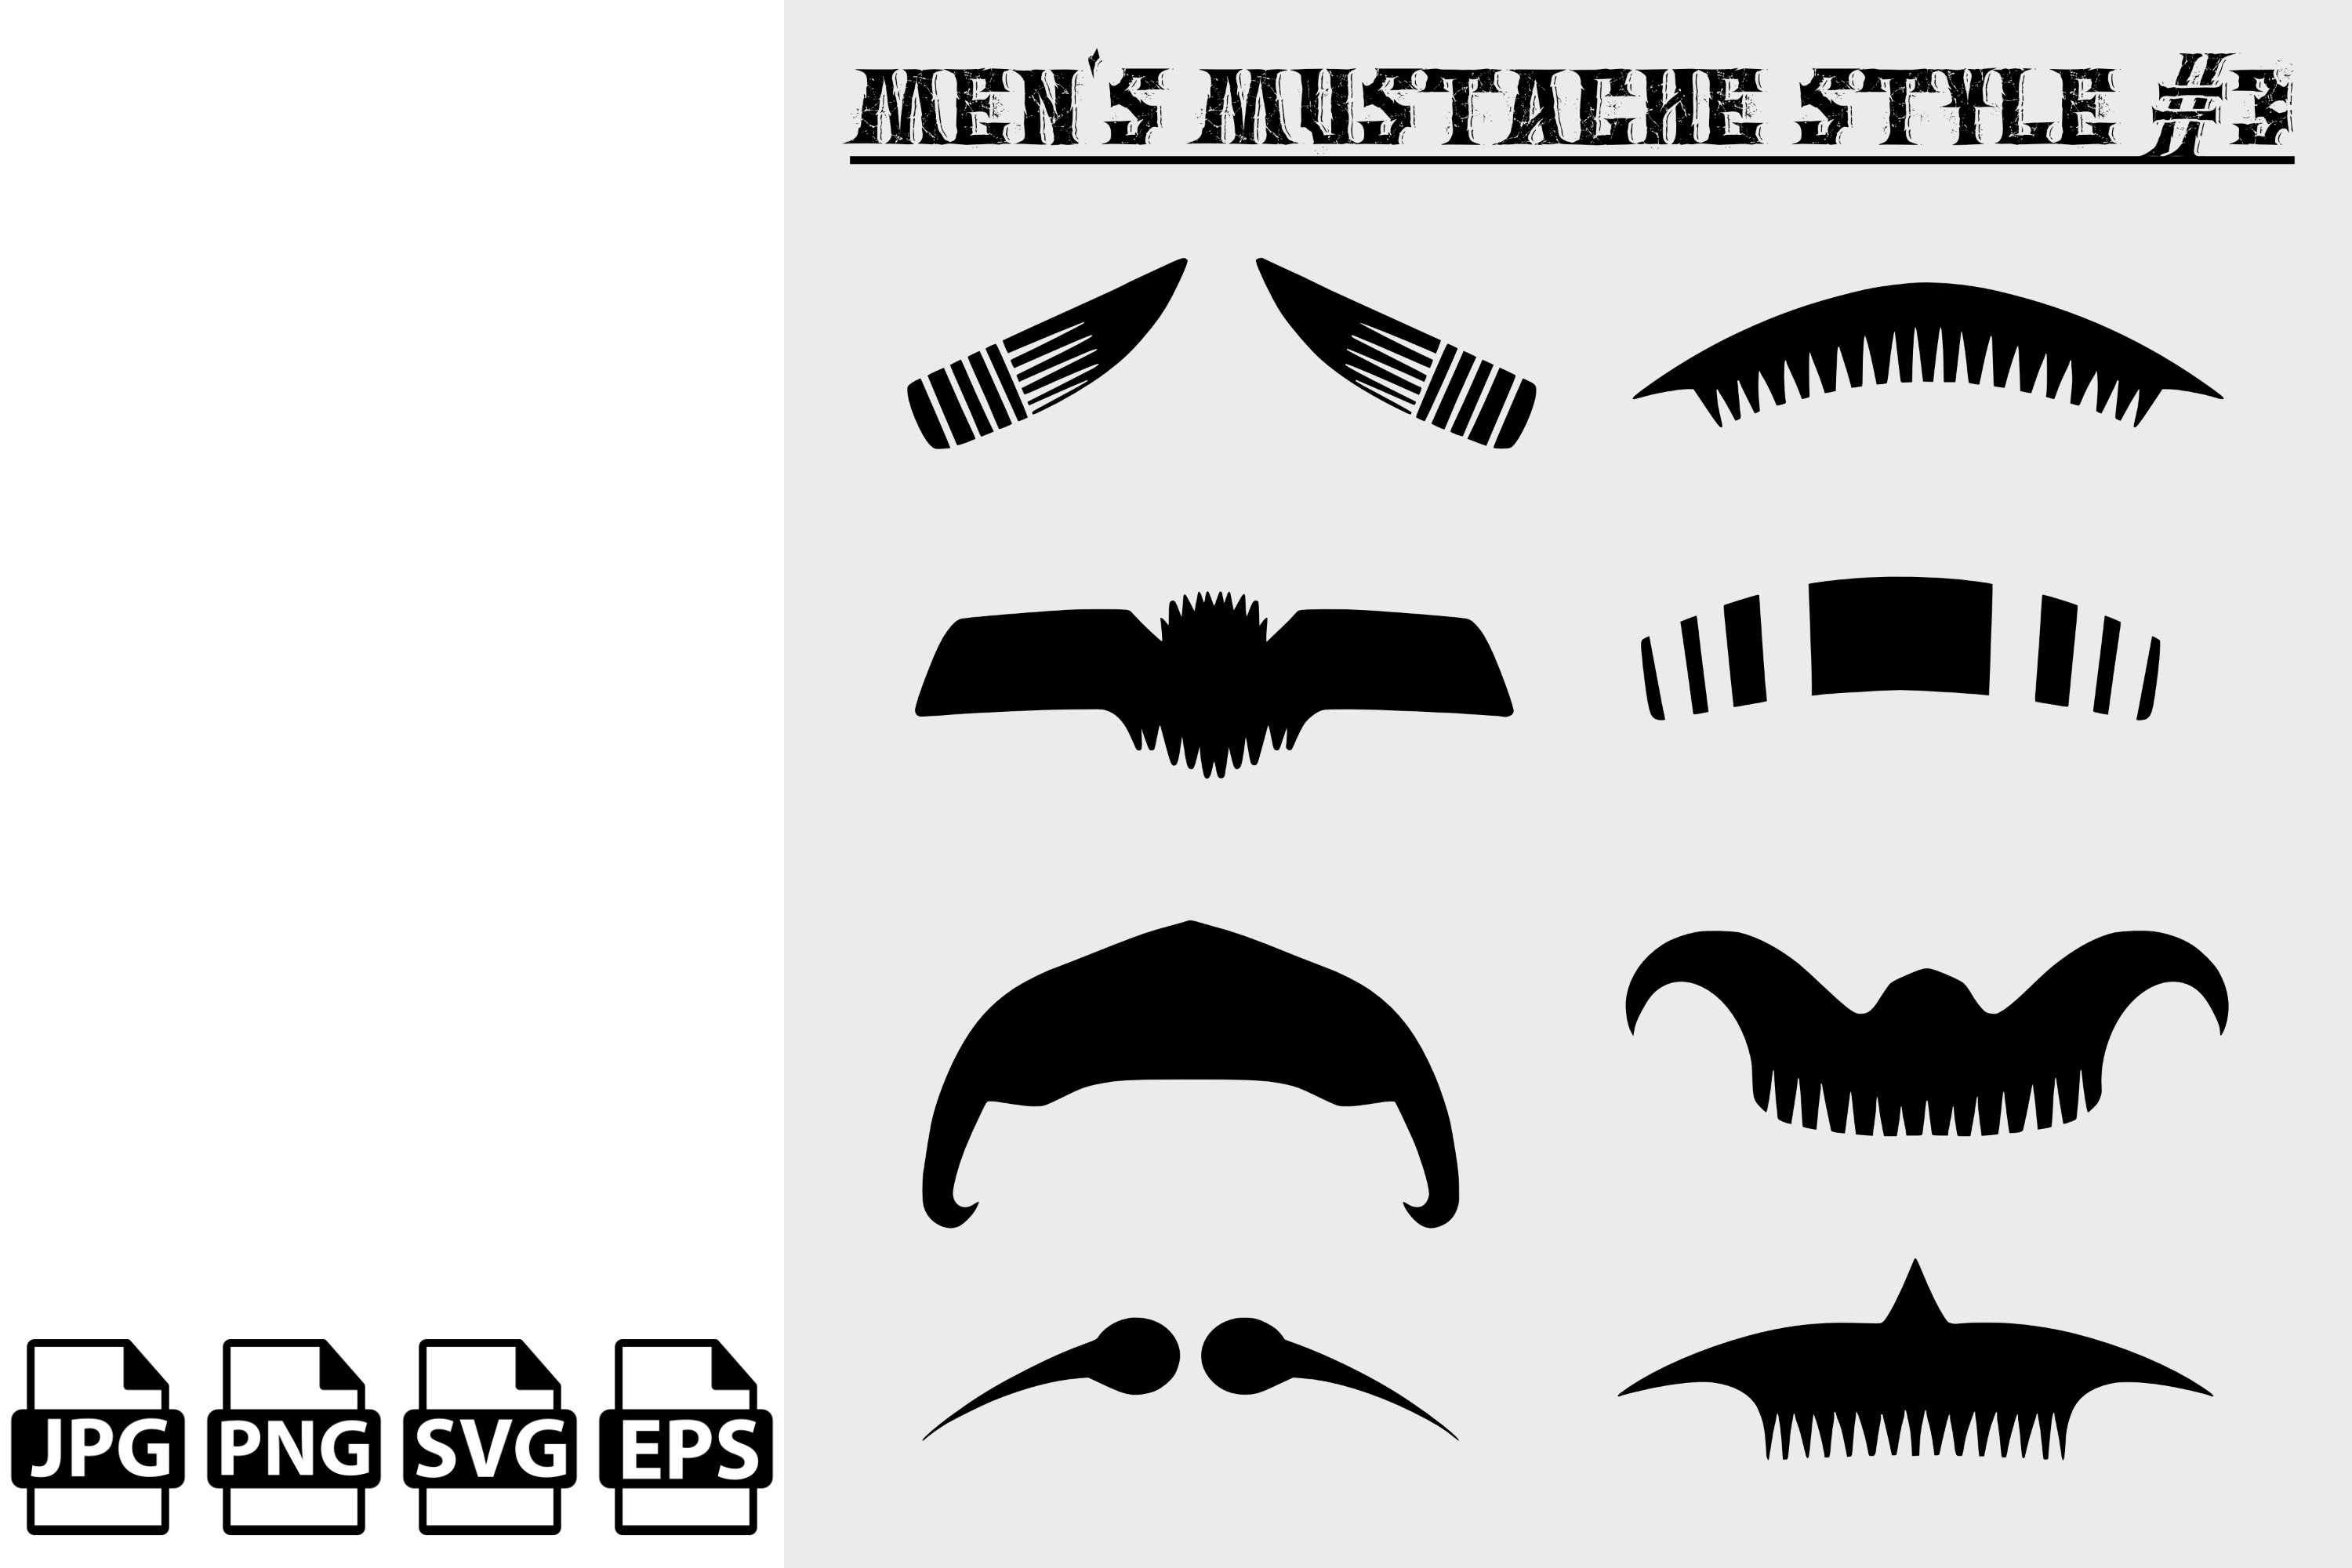 Mustache set vector 77 cover image.